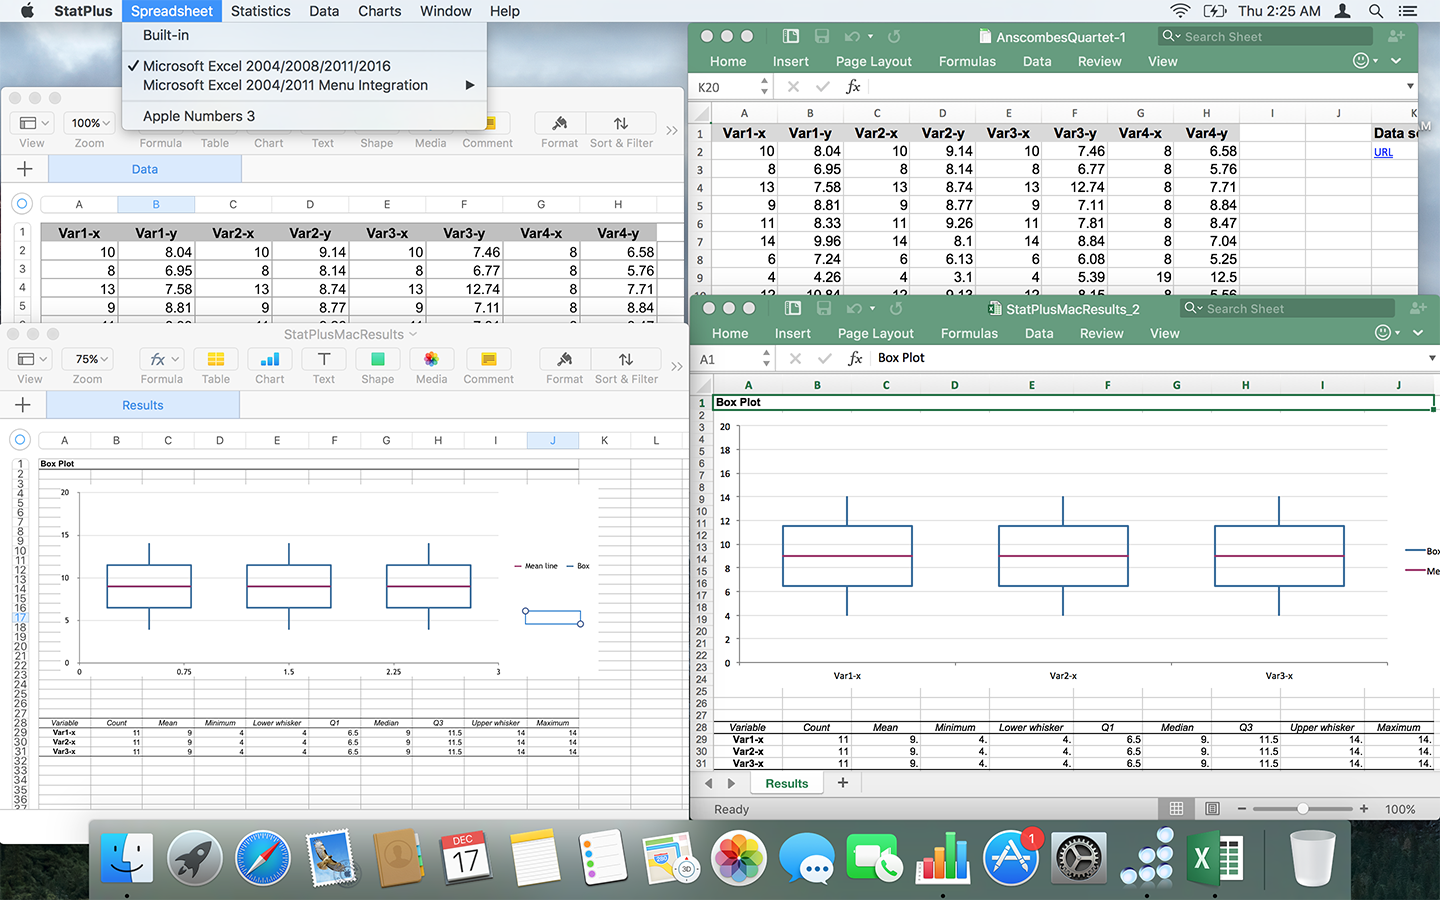 analysis toolpak for mac excel